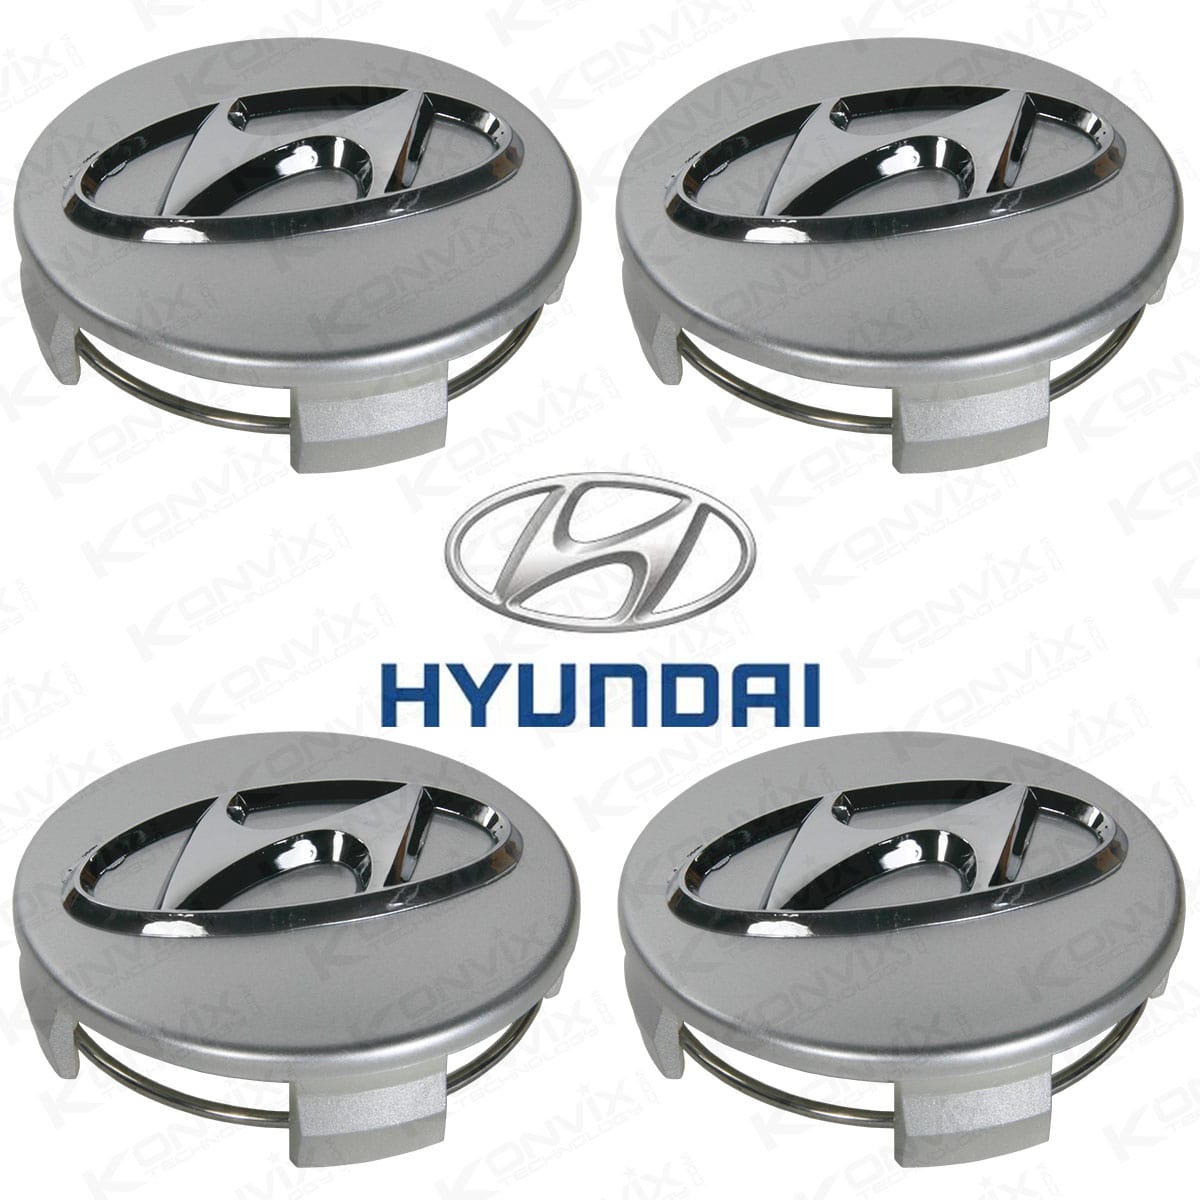 Lot de 4 caches moyeux HYUNDAI 60 mm logo Chrome fond mat